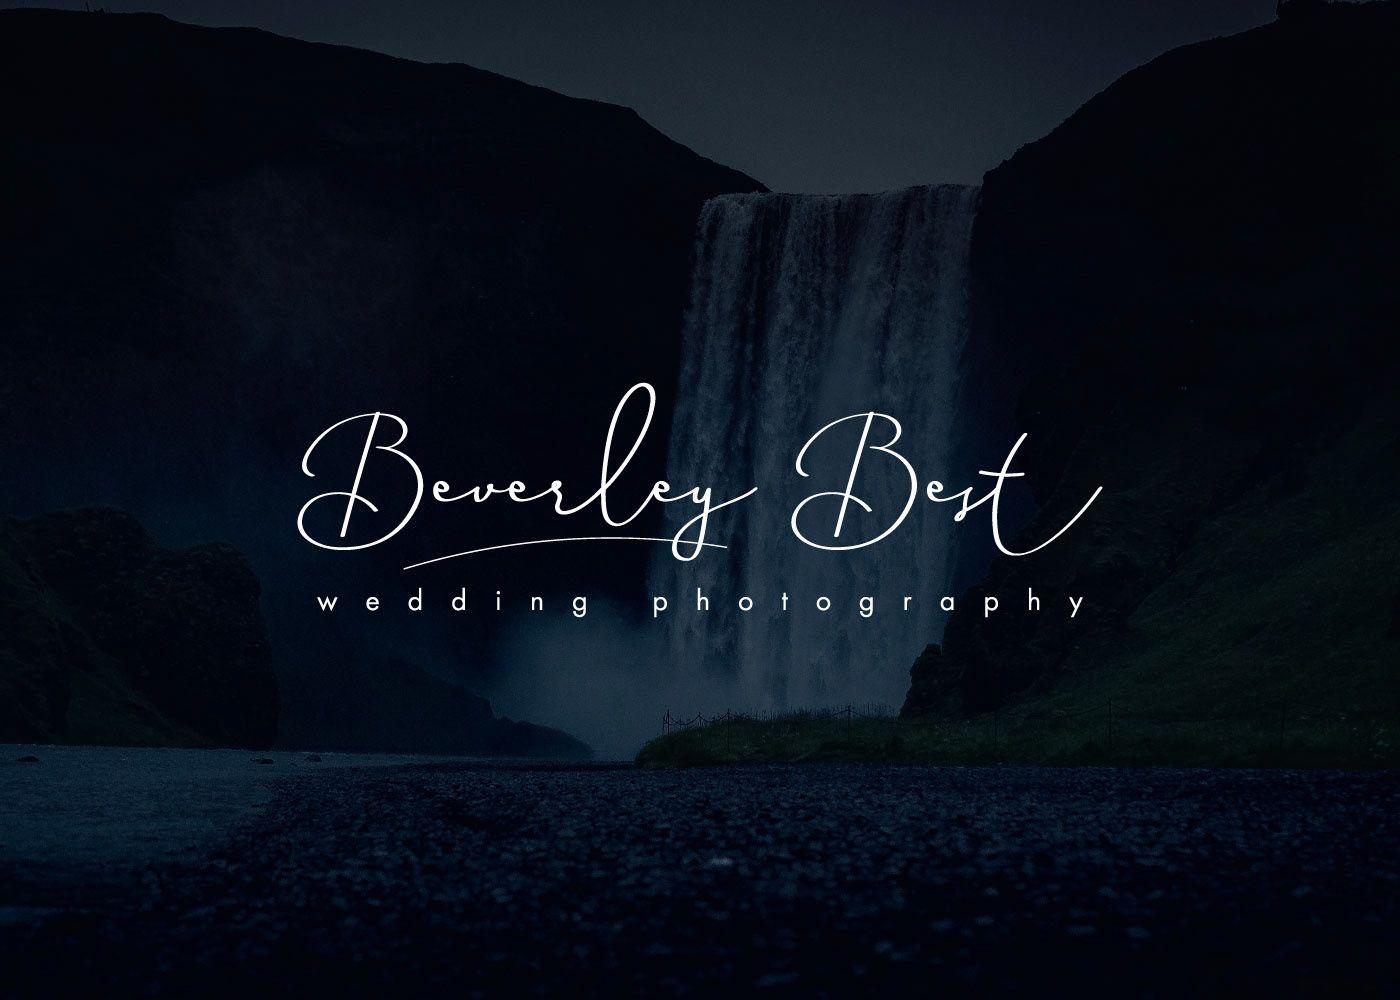 I'll Blue Logo - Signature logos for Photographers on Behance